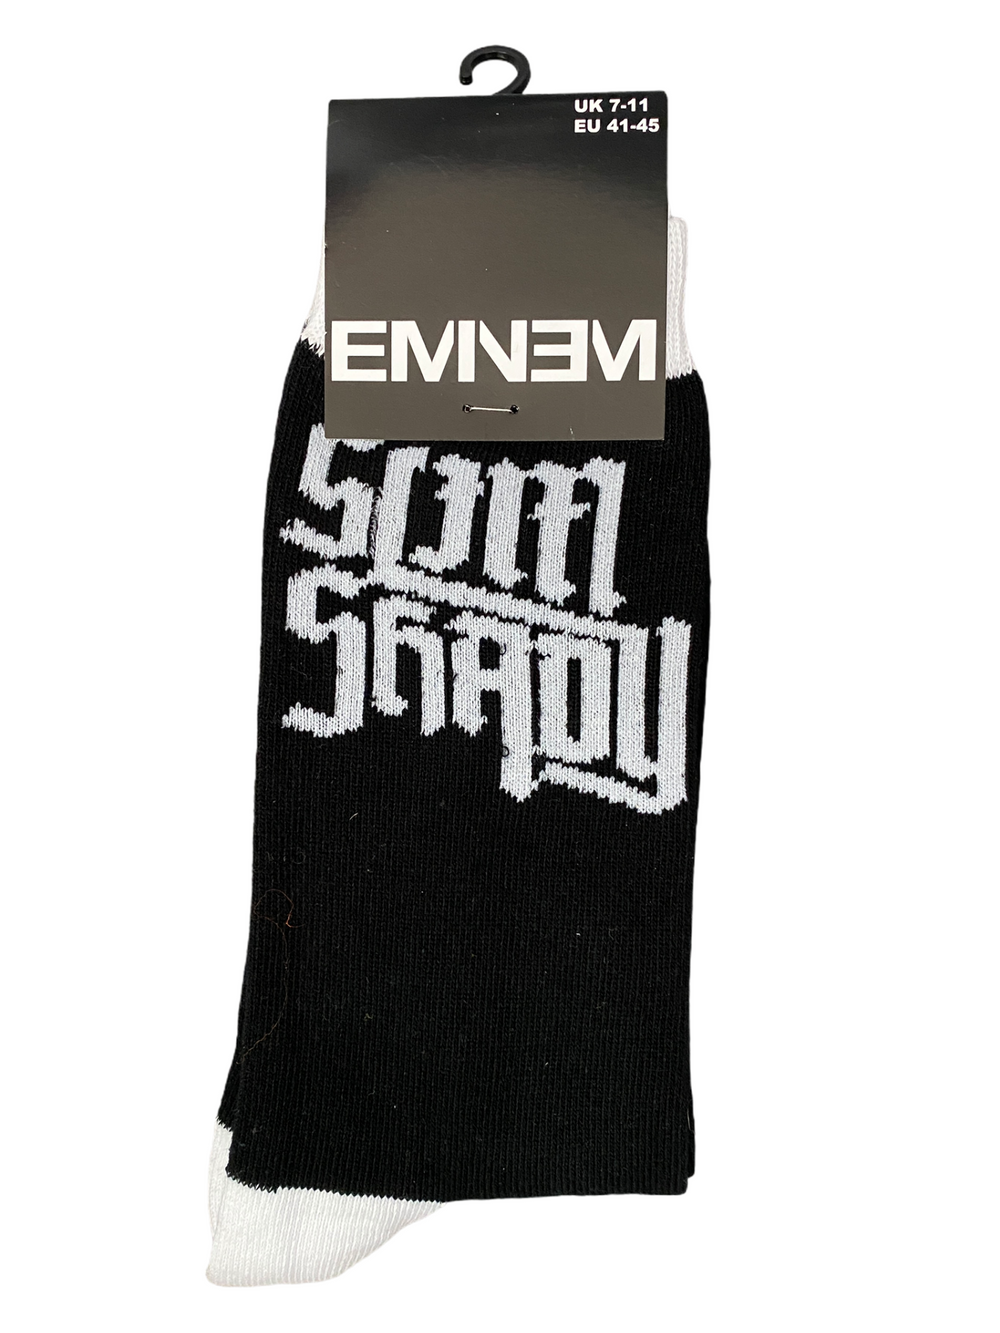 Eminem Slim Shady Official Product 1 Pair Jacquard Socks Size 7-11 UK Brand New